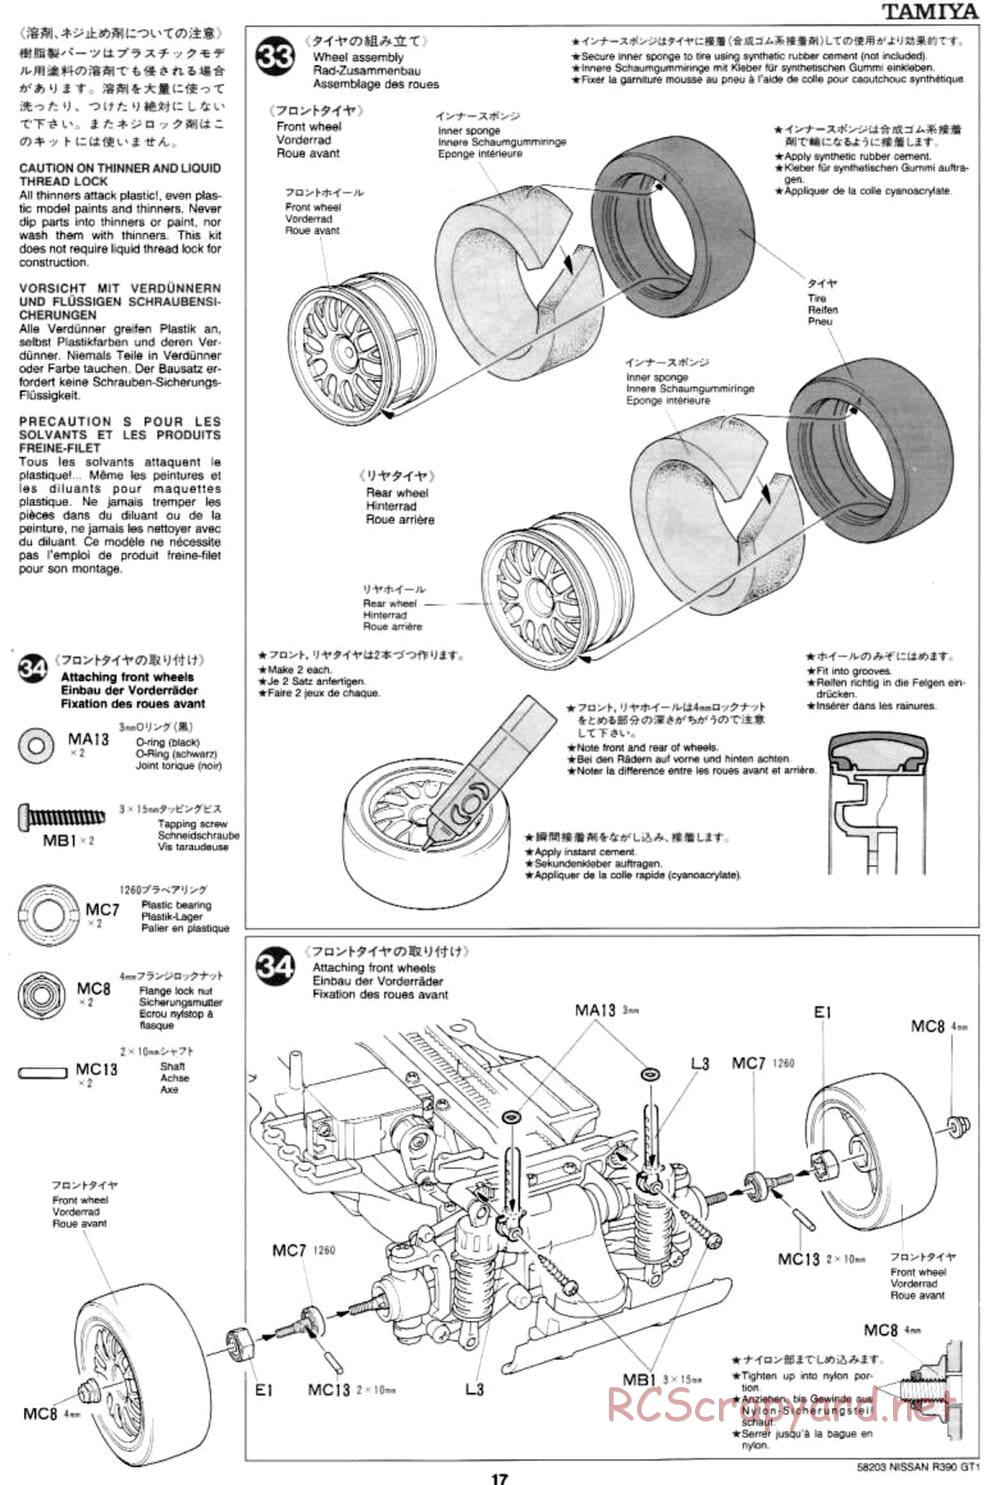 Tamiya - Nissan R390 GT1 - TA-03R Chassis - Manual - Page 17